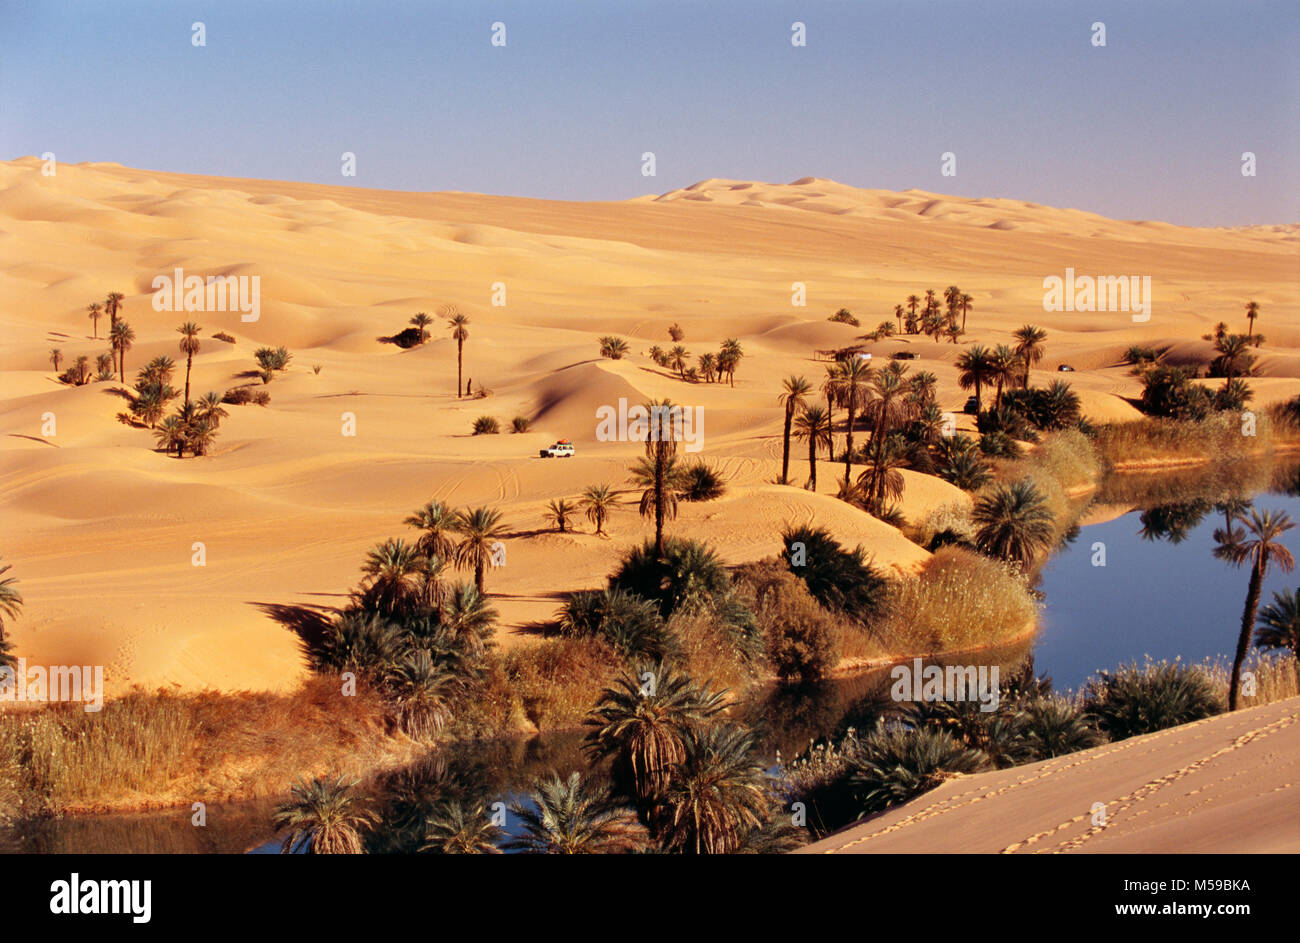 Libya. Ubari. Sahara desert. Ubari Sandsea. Um El Ma salt lake. Oasis. Palm trees. Water. 4x4 4WD car. Stock Photo